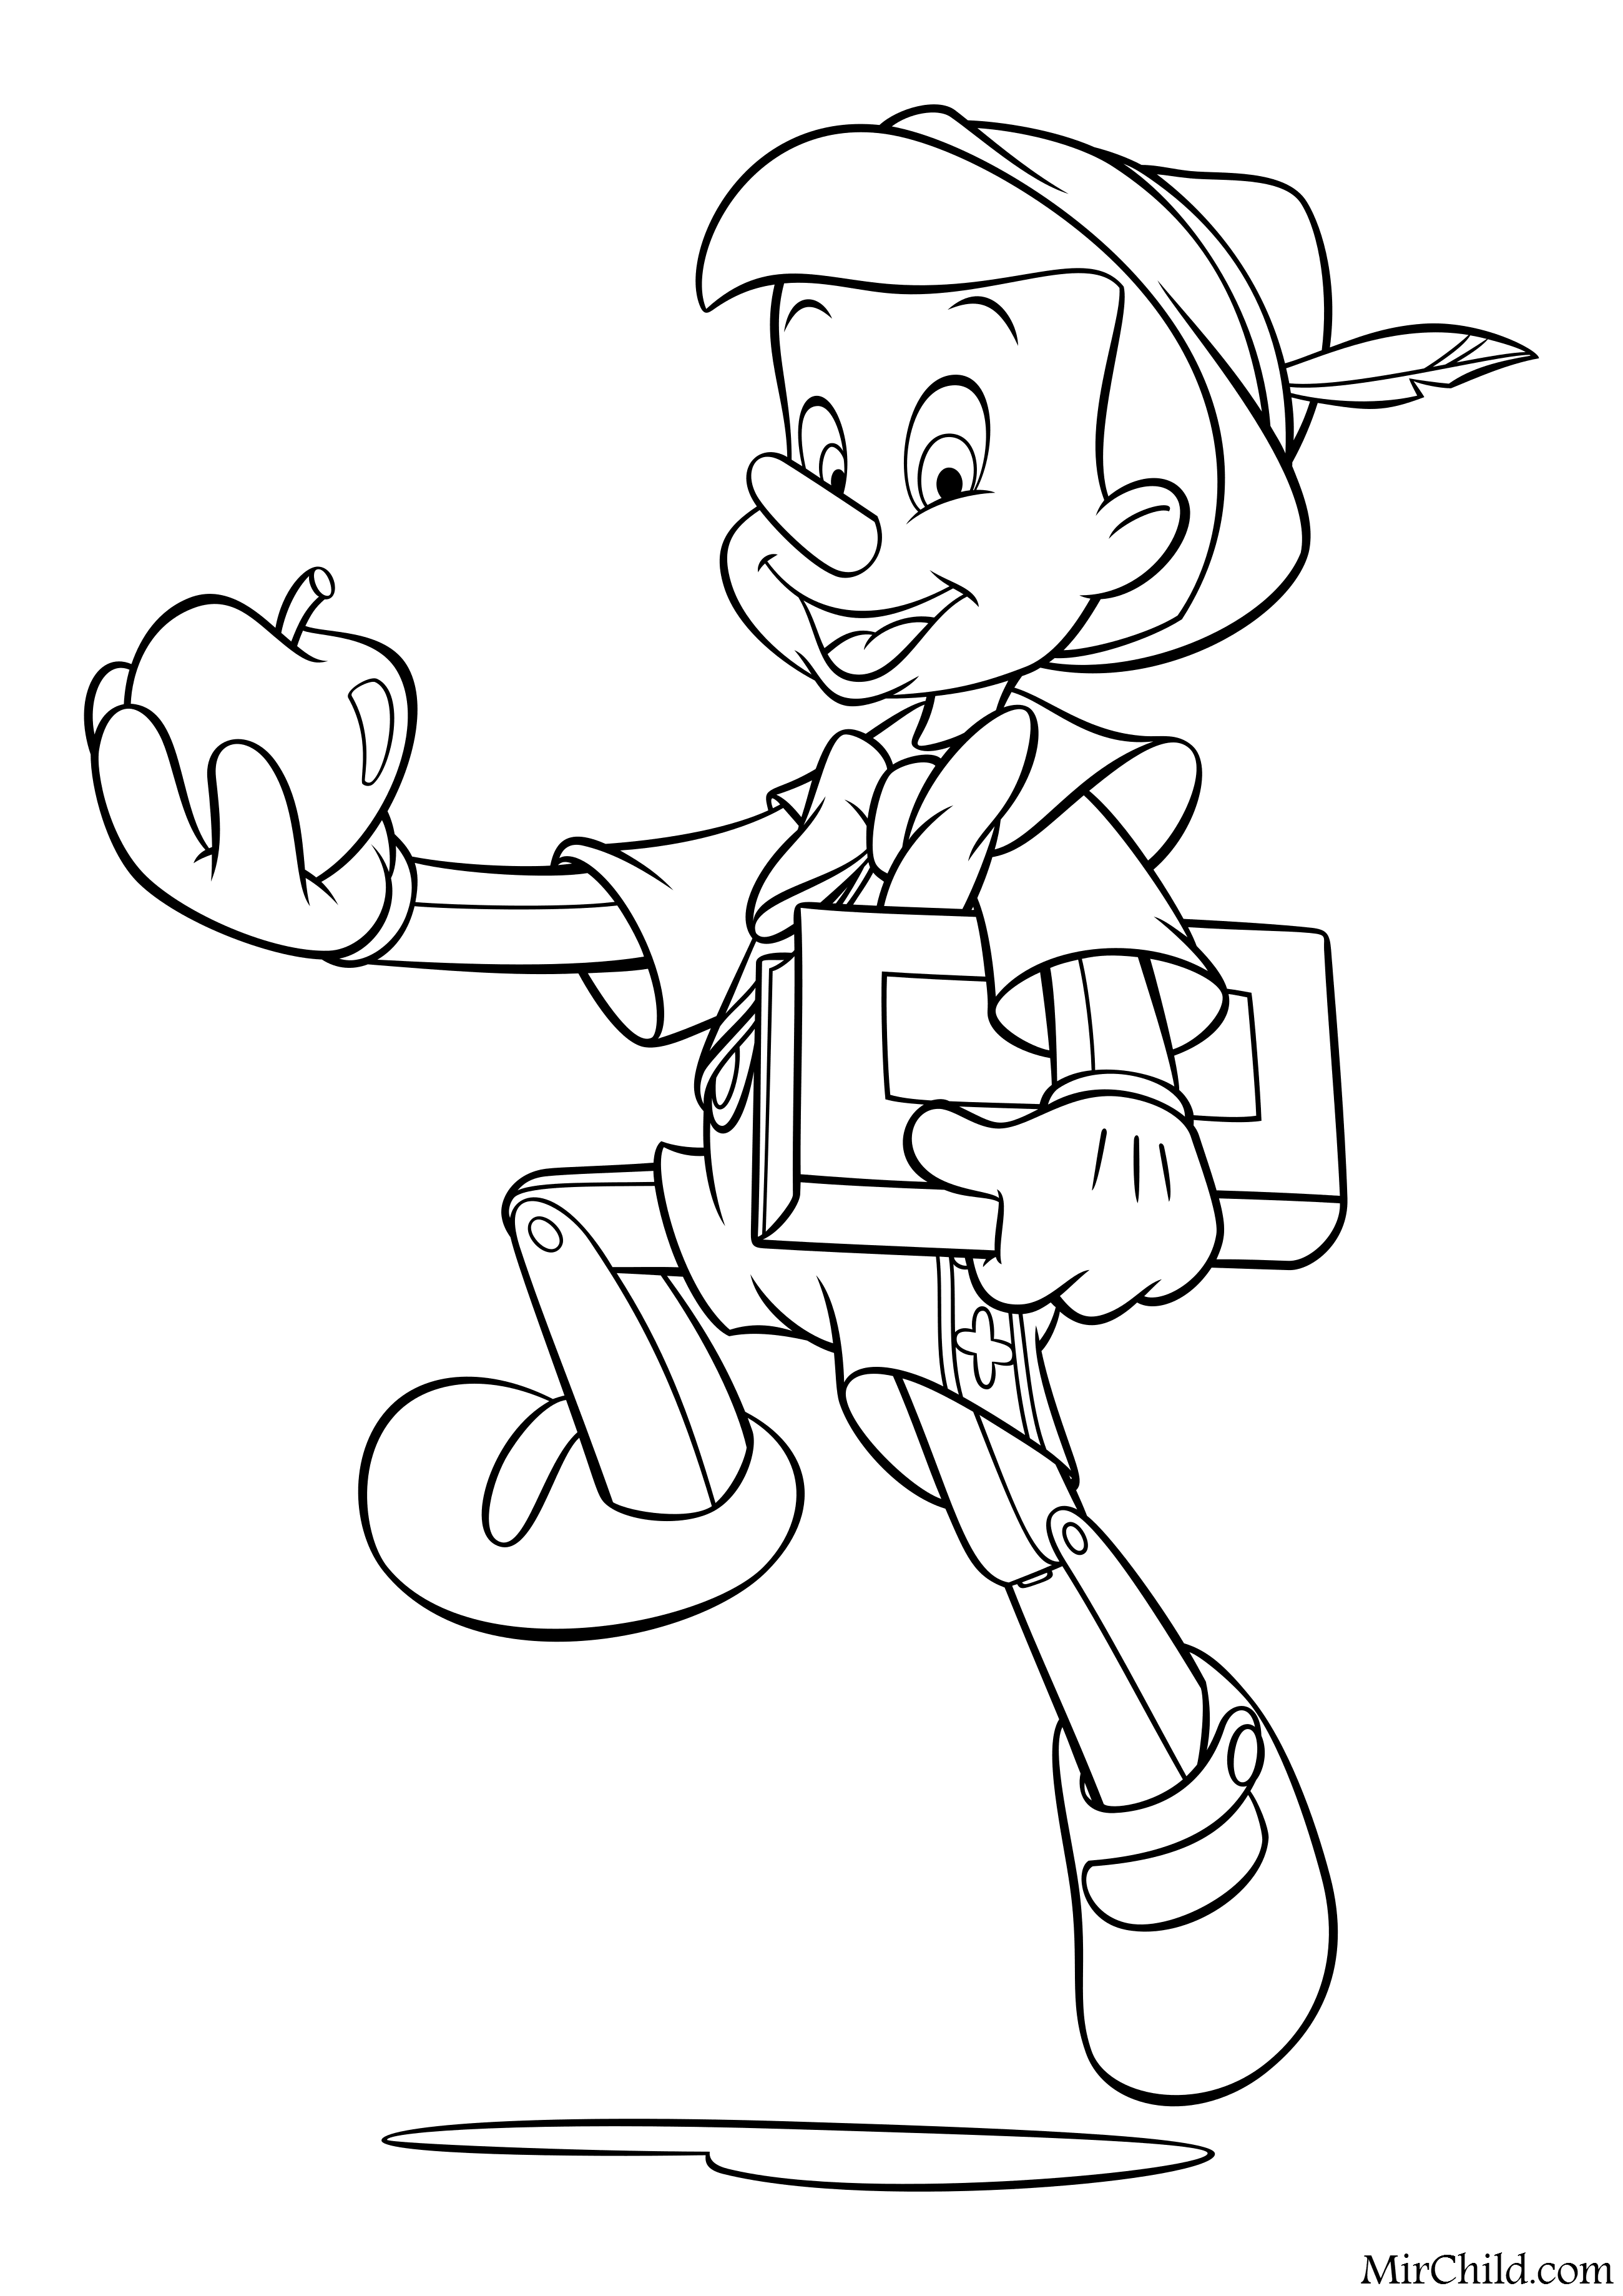 Пиноккио рисунок карандашом